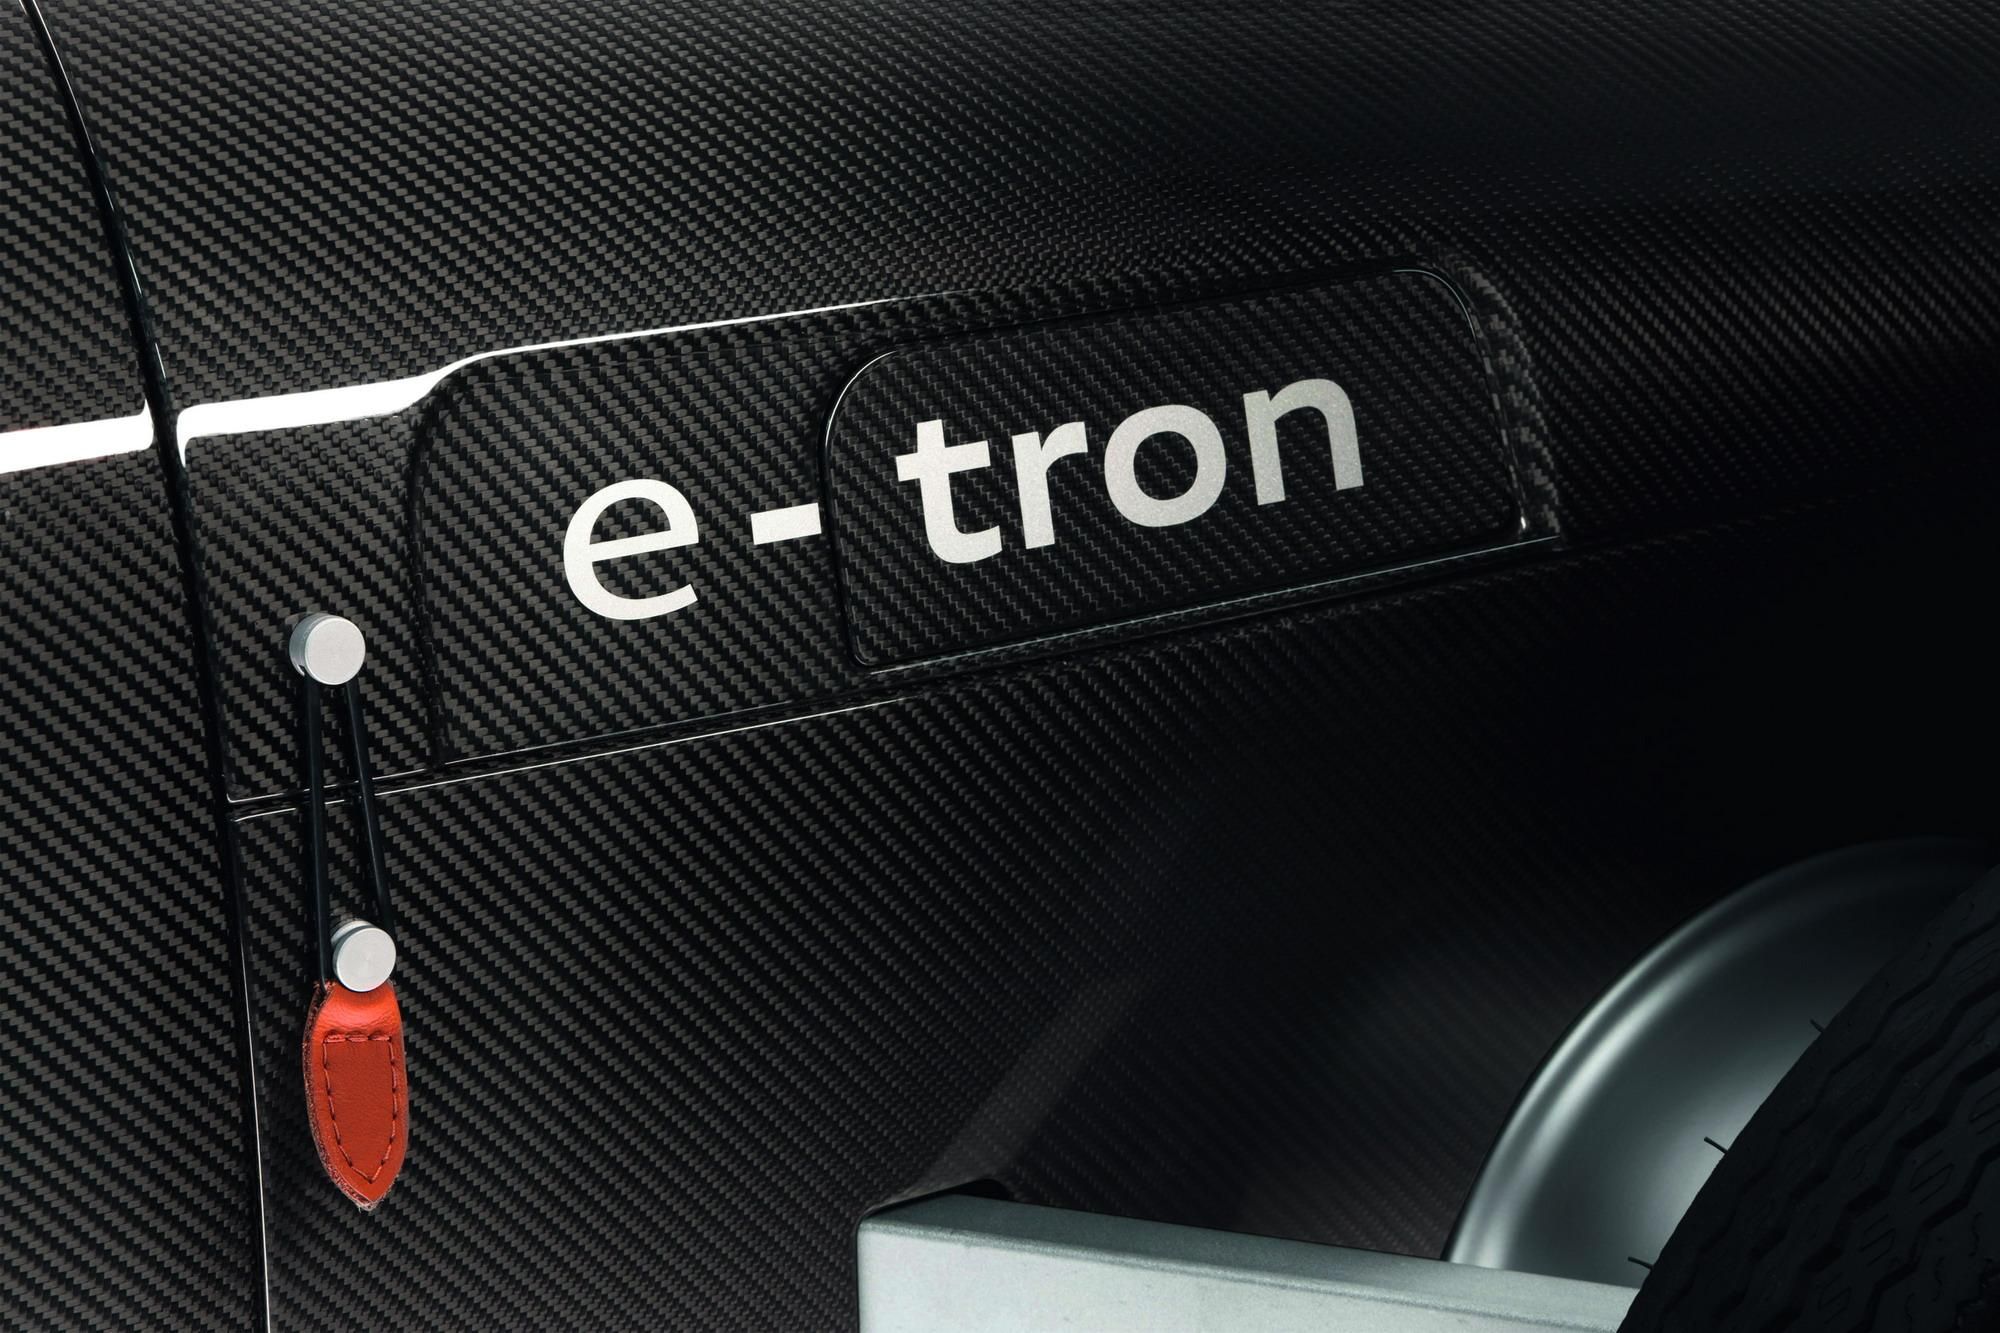 2011 Auto Union Type C e-tron study